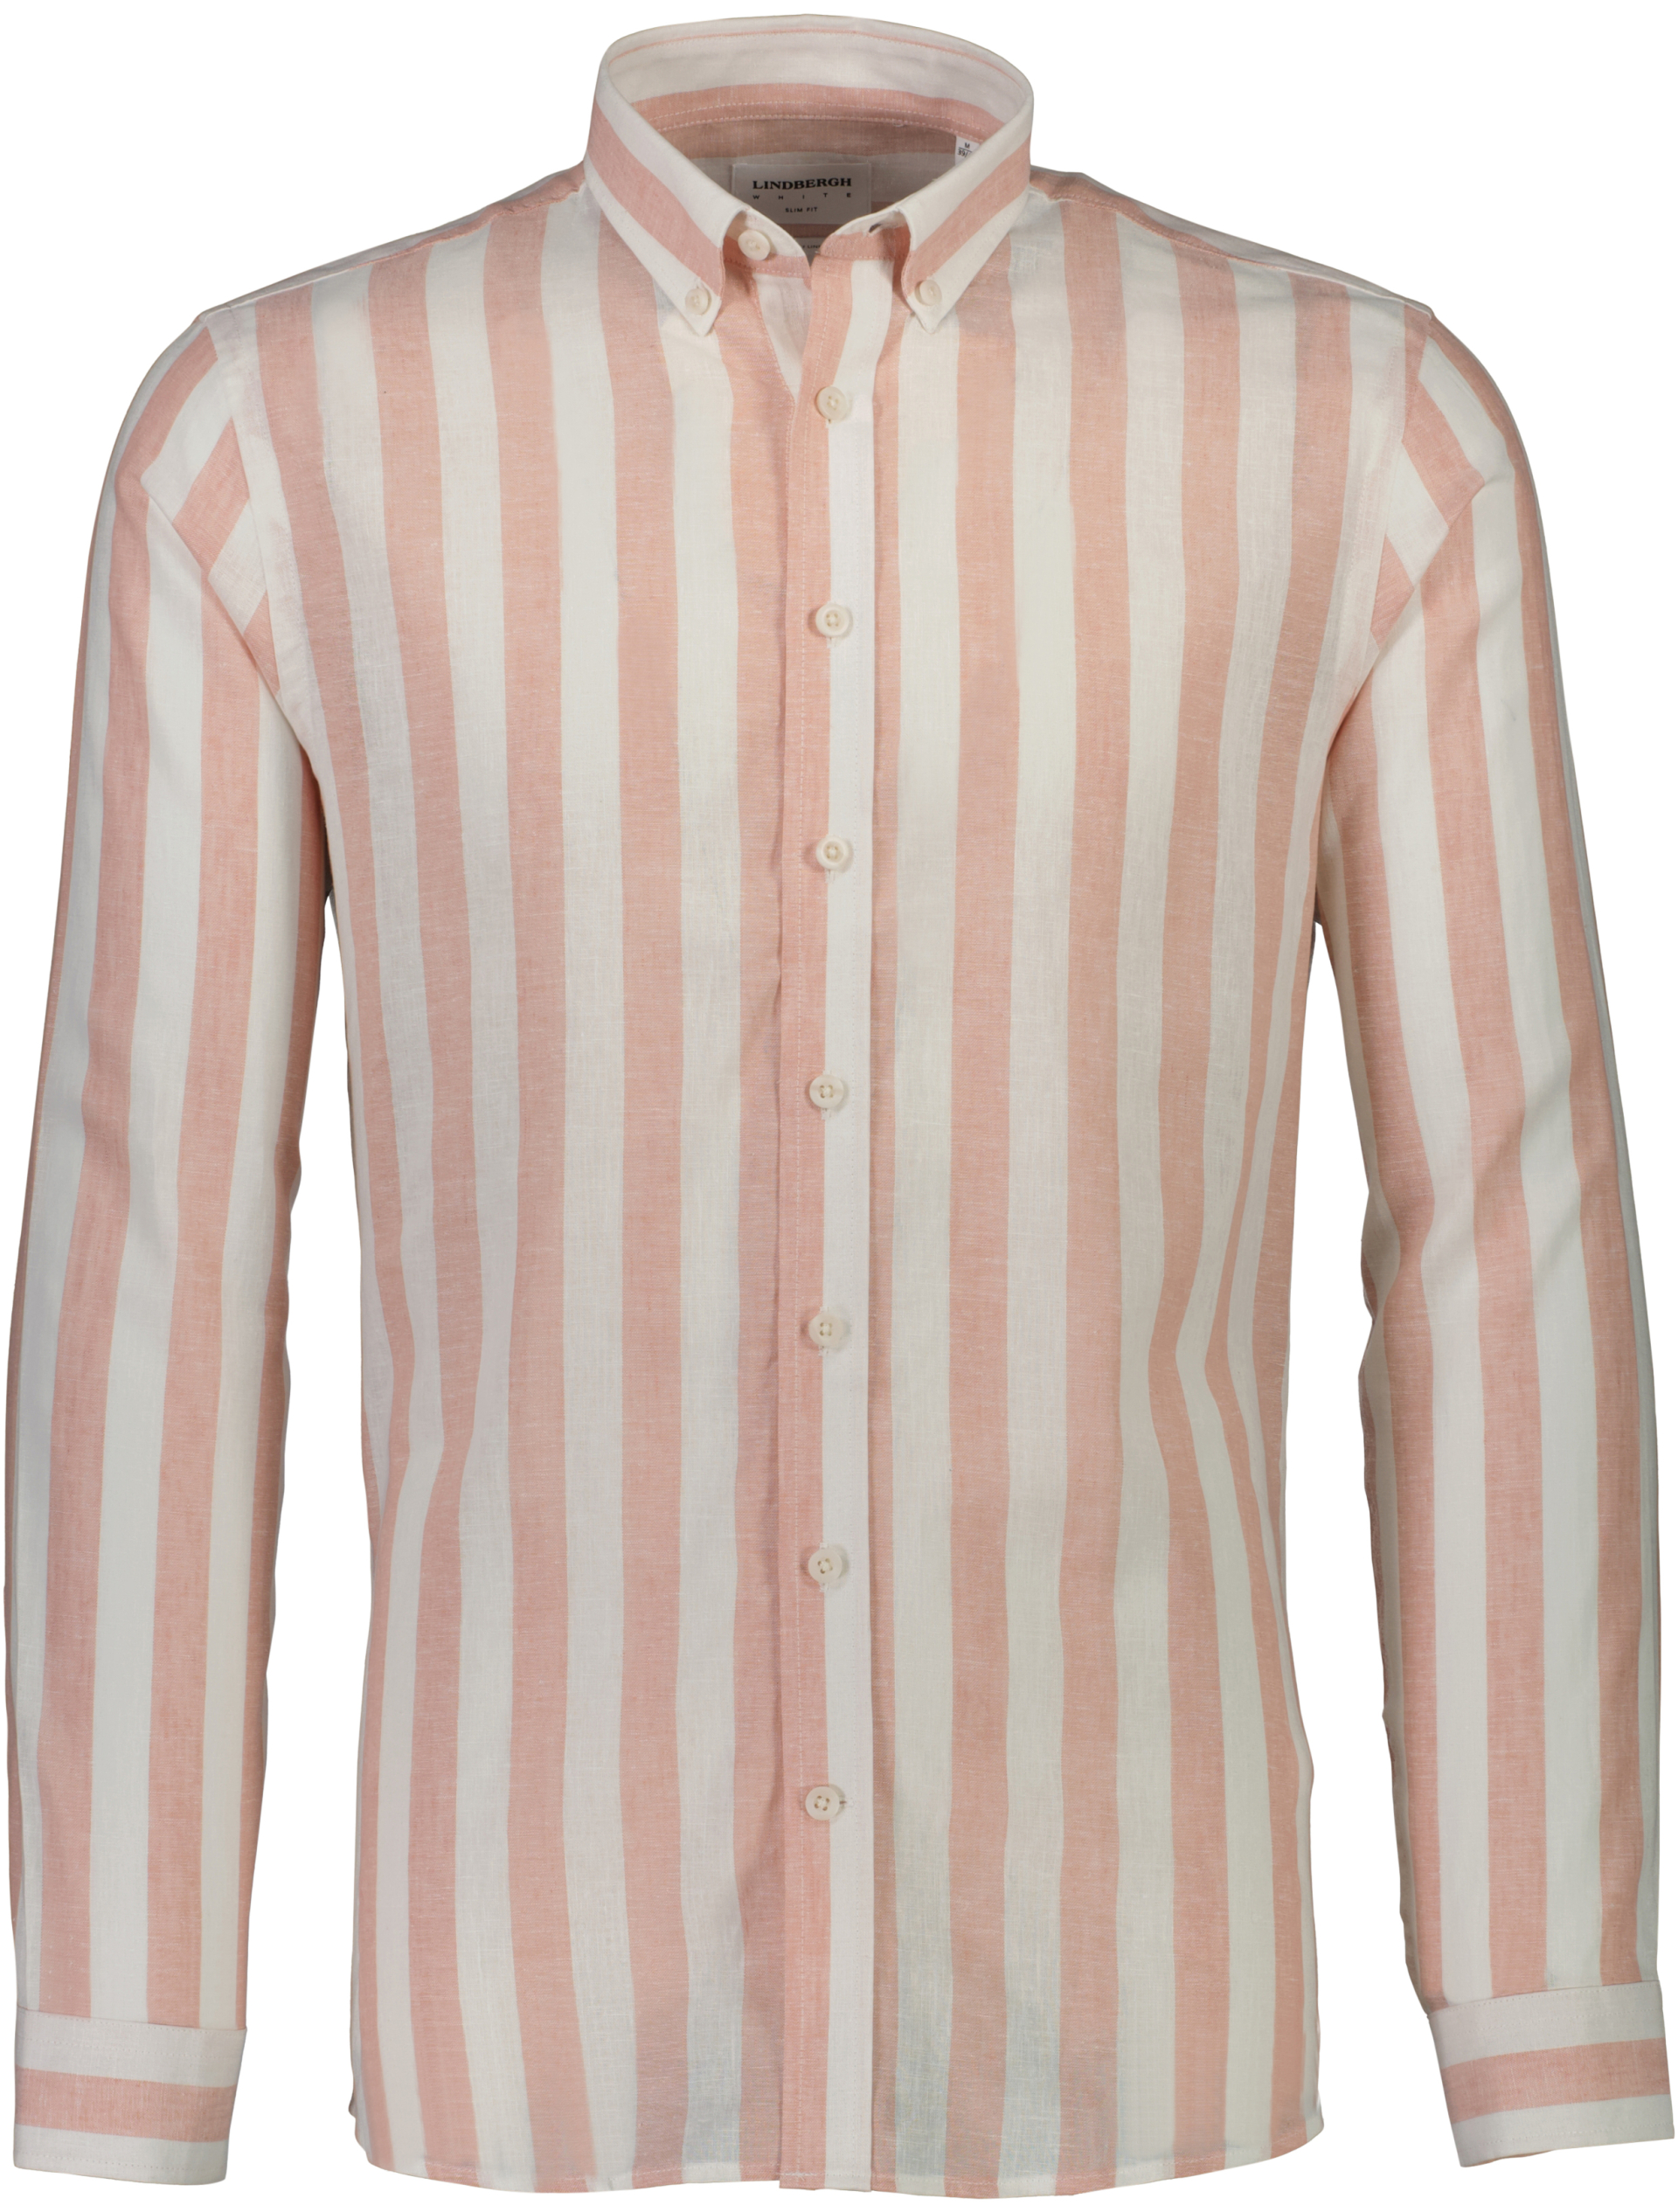 Lindbergh Linen shirt red / dk pink coral